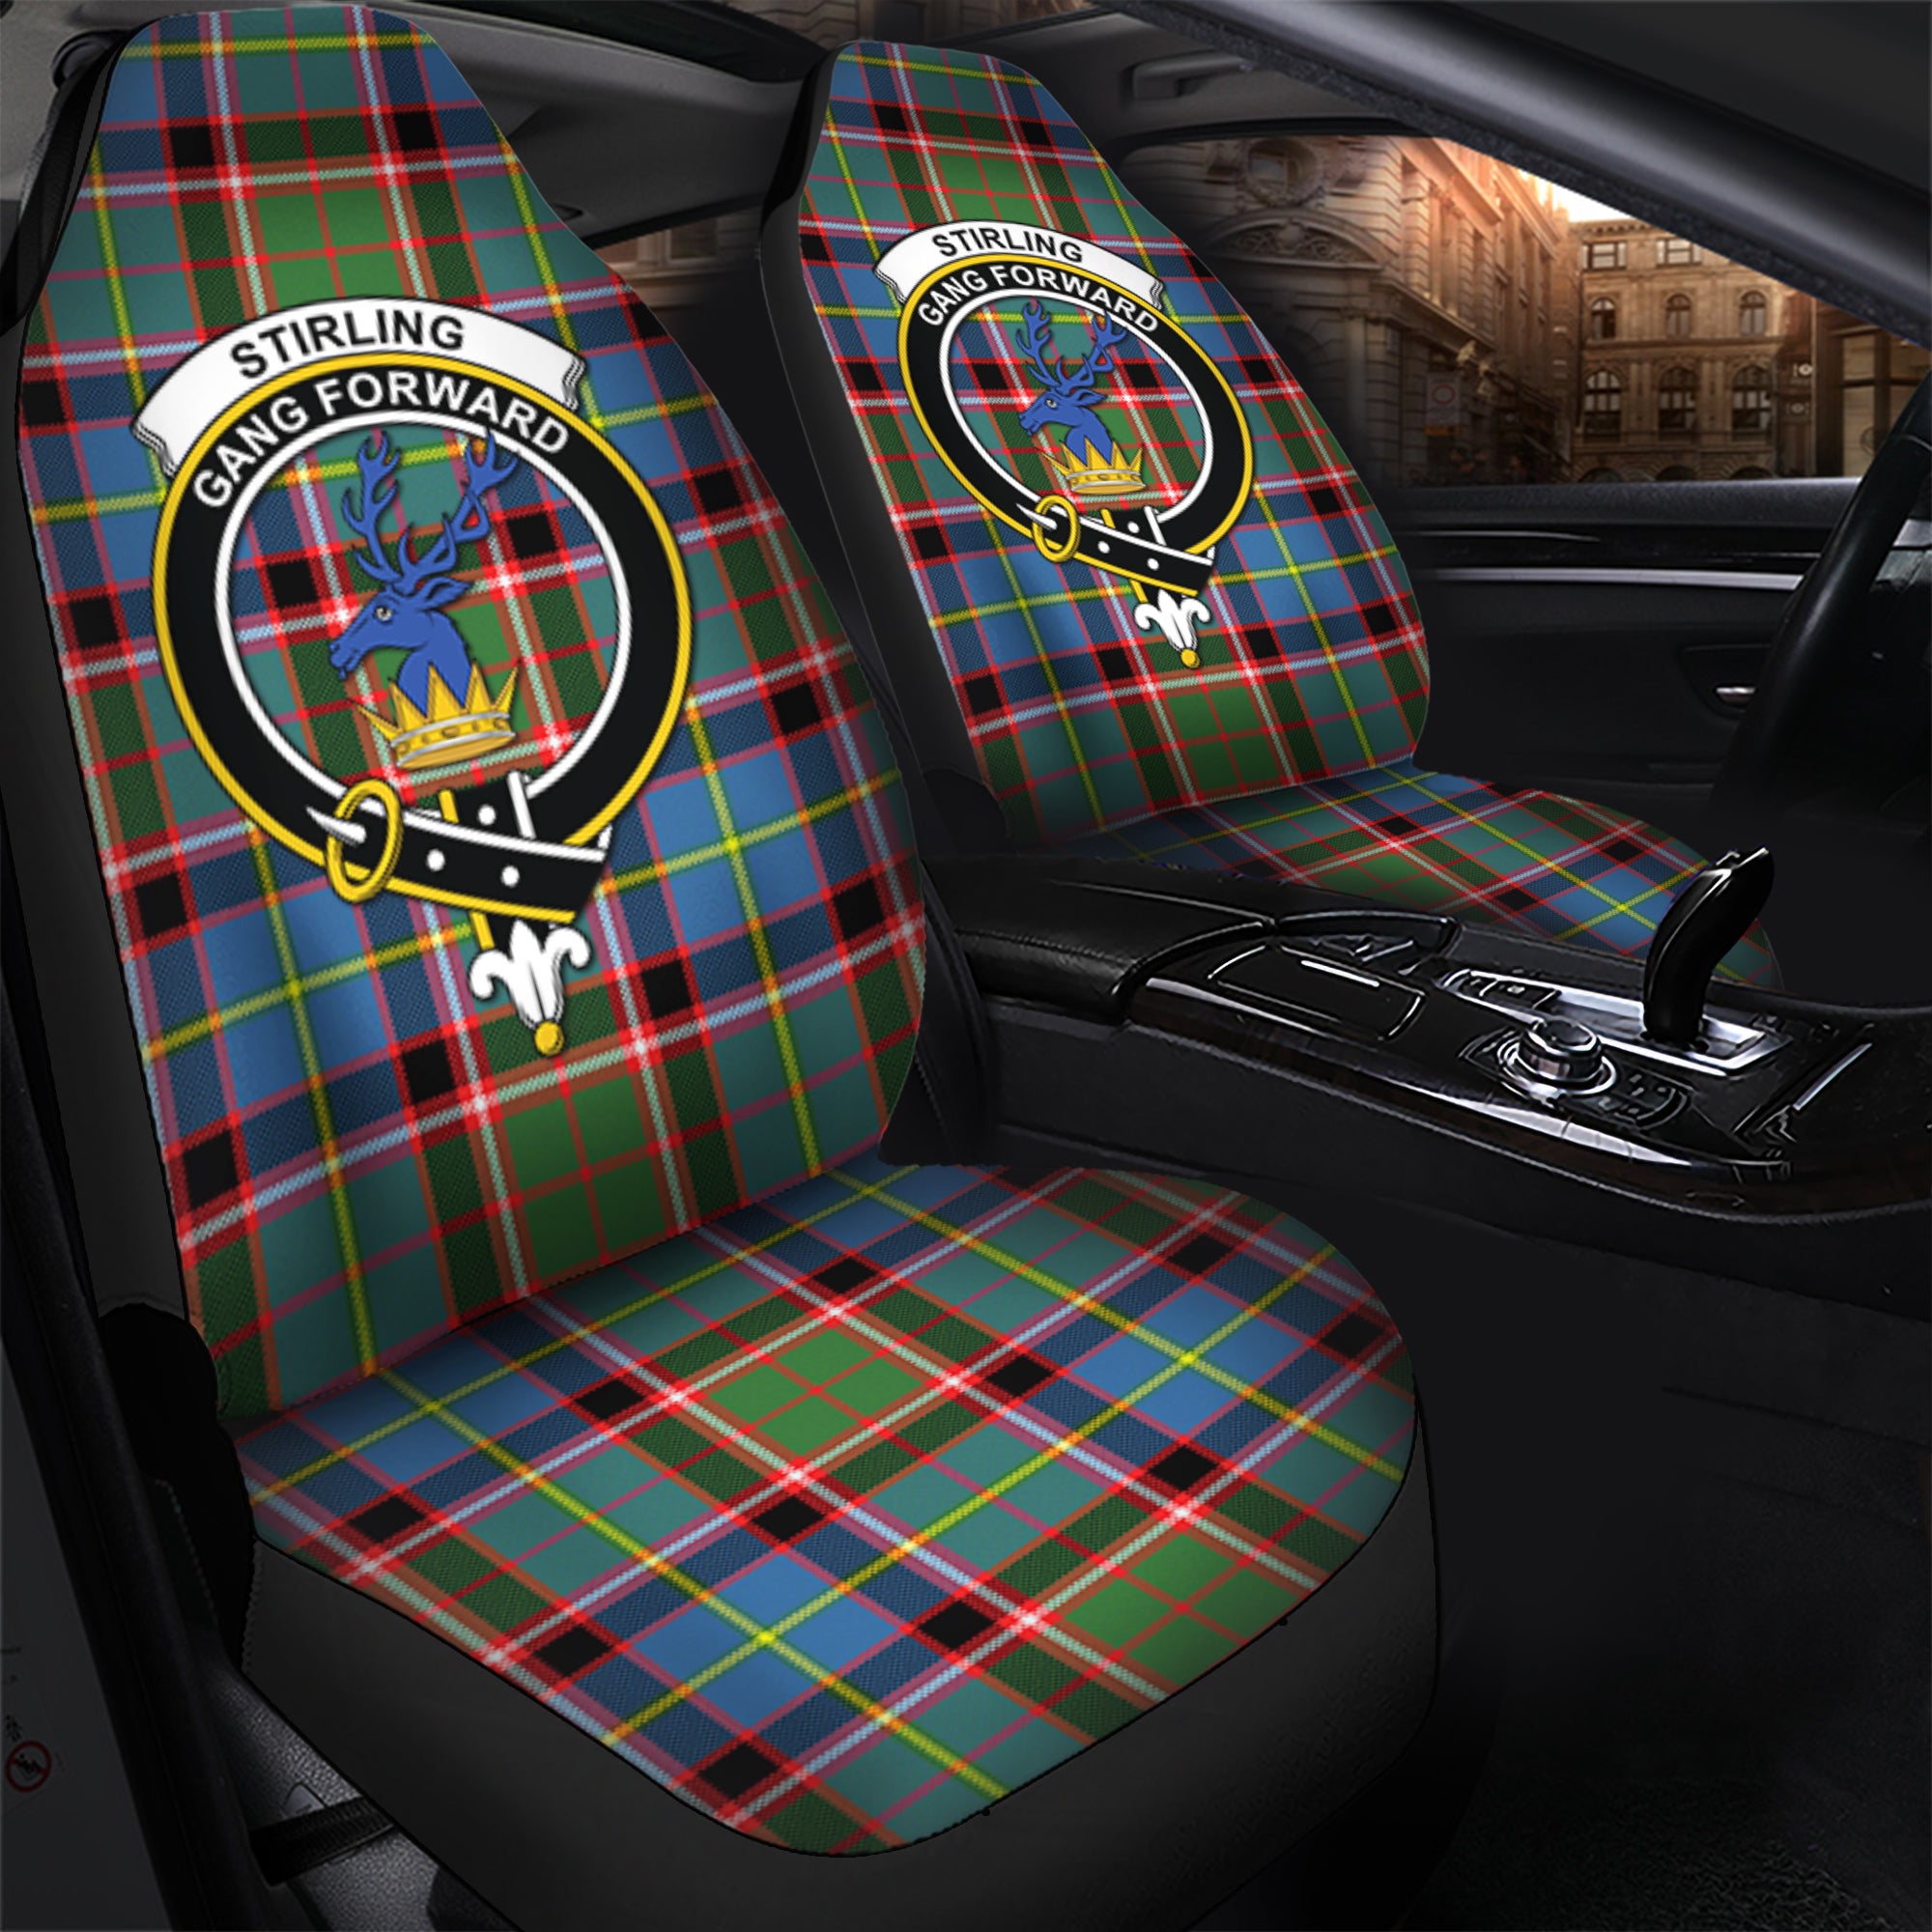 Stirling Bannockburn Clan Tartan Car Seat Cover, Family Crest Tartan Seat Cover TS23